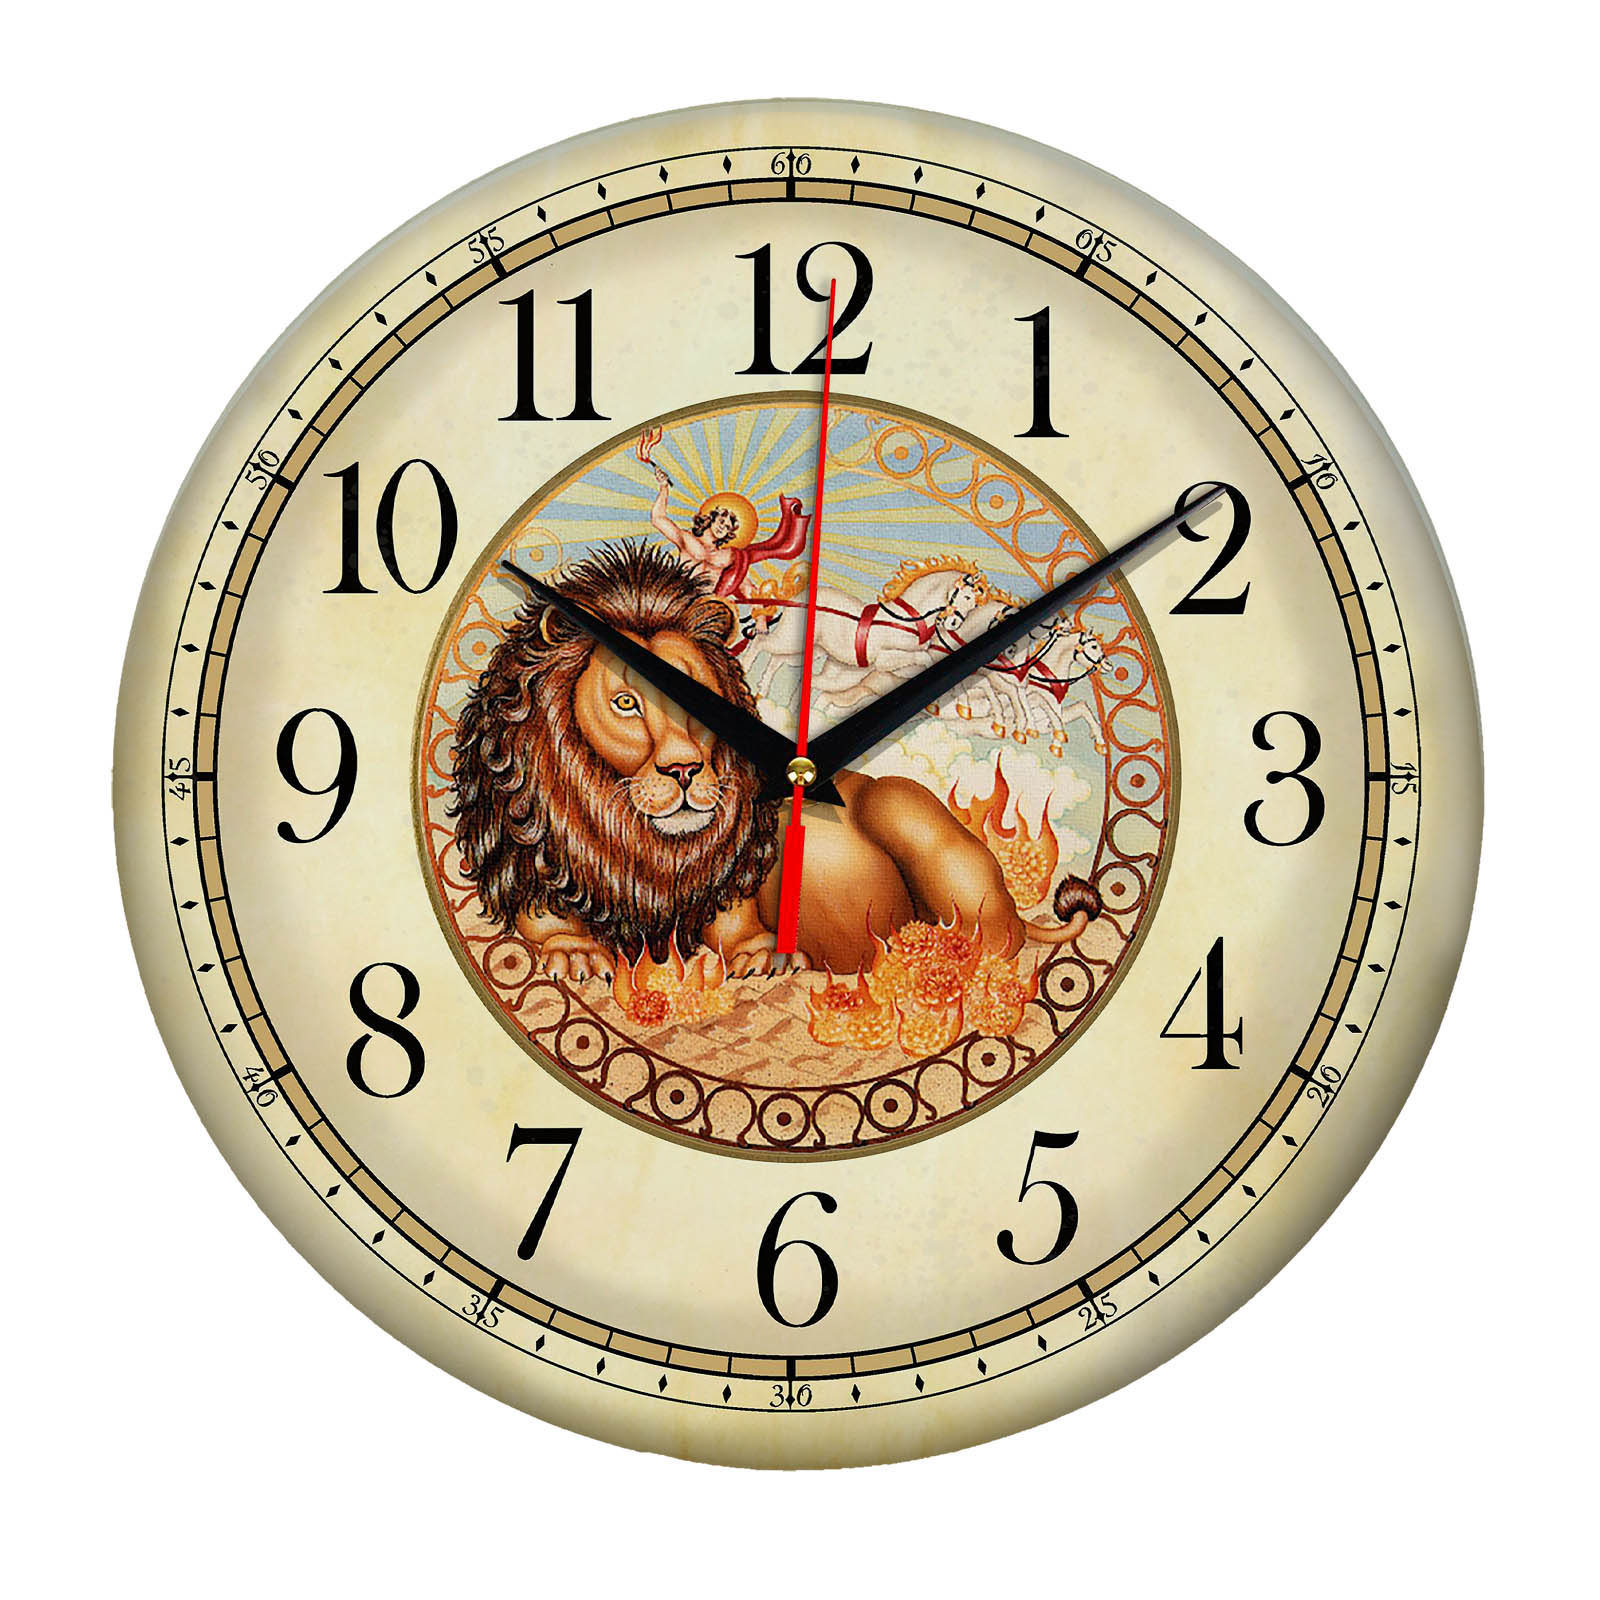 Часы сувенир. Часы настенные сувенирные. Часы со знаками зодиака. Часы zodiac